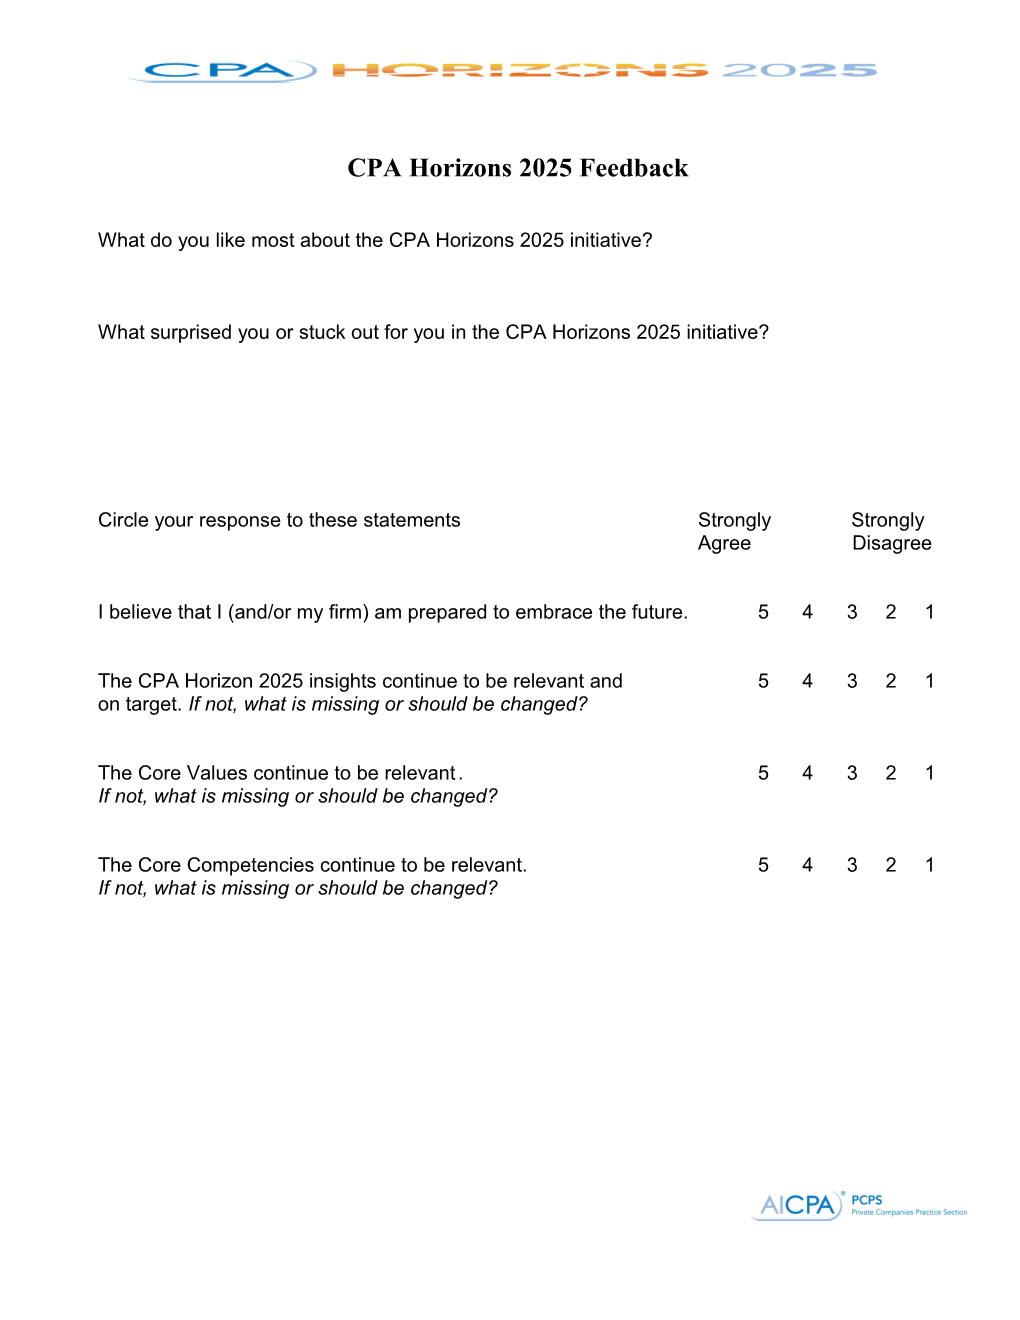 CPA Horizons 2025 Feedback Form & Future Forum Evaluation Form